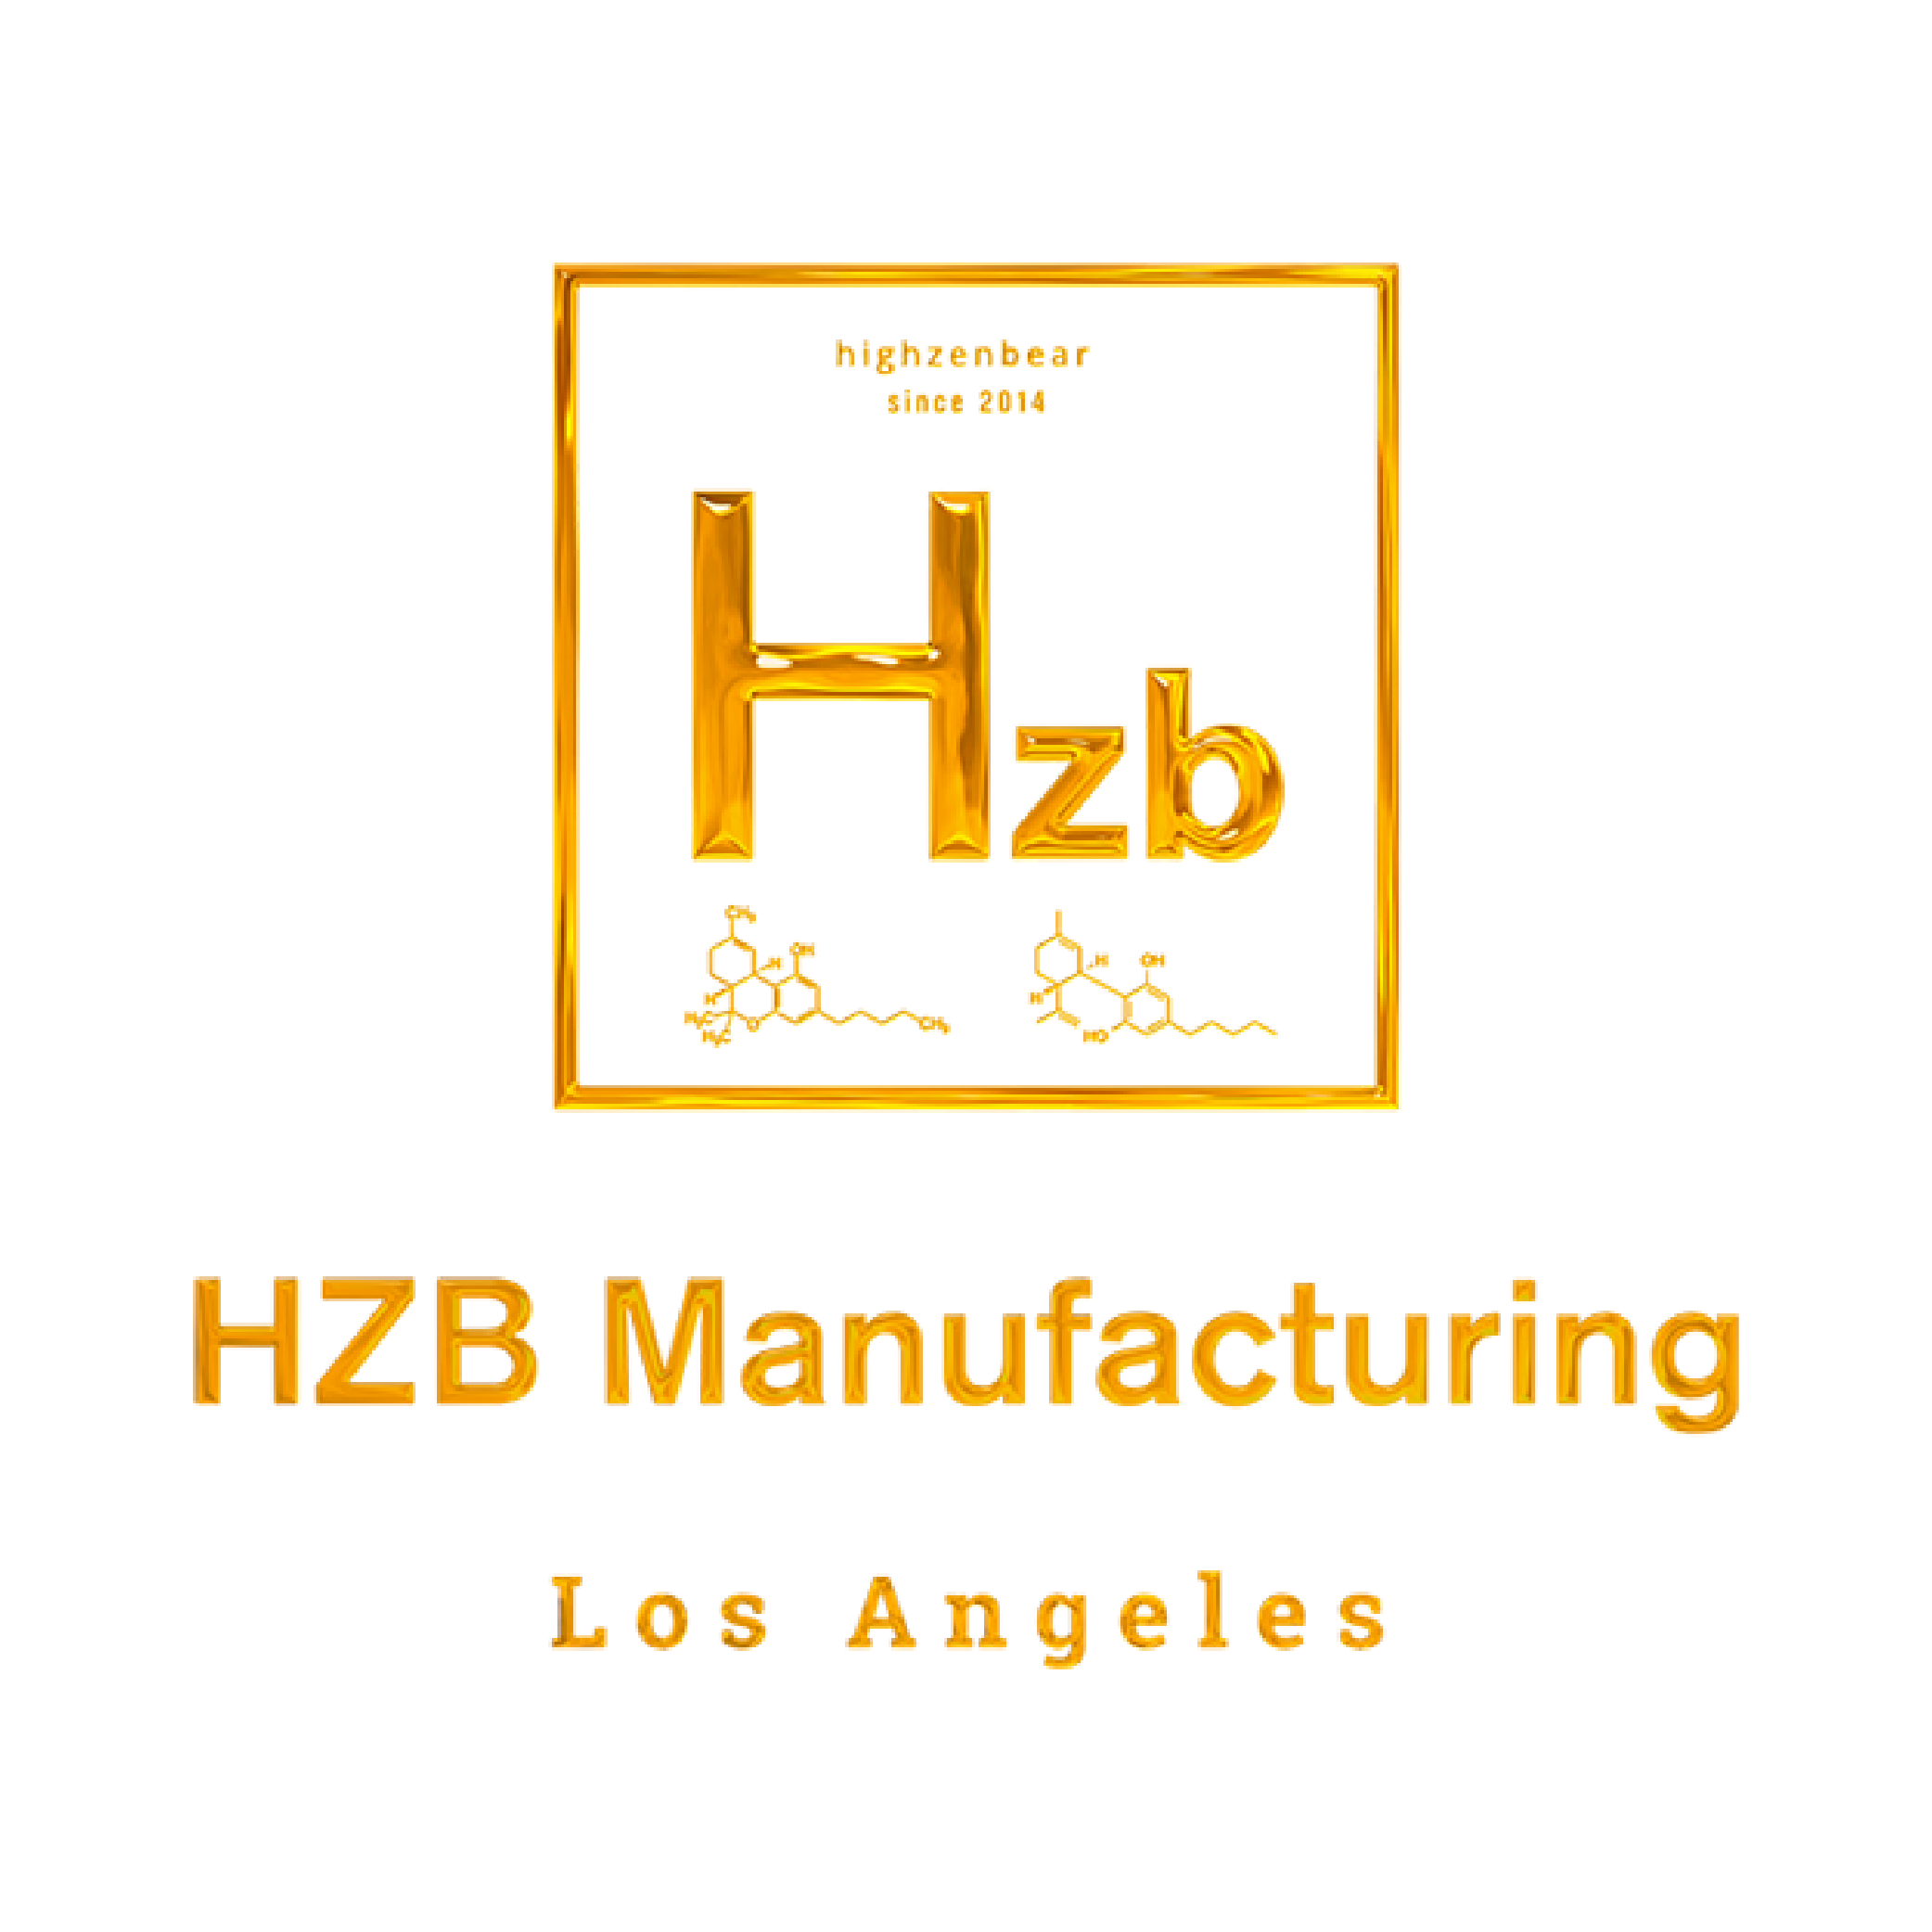 HZB Manufacturing